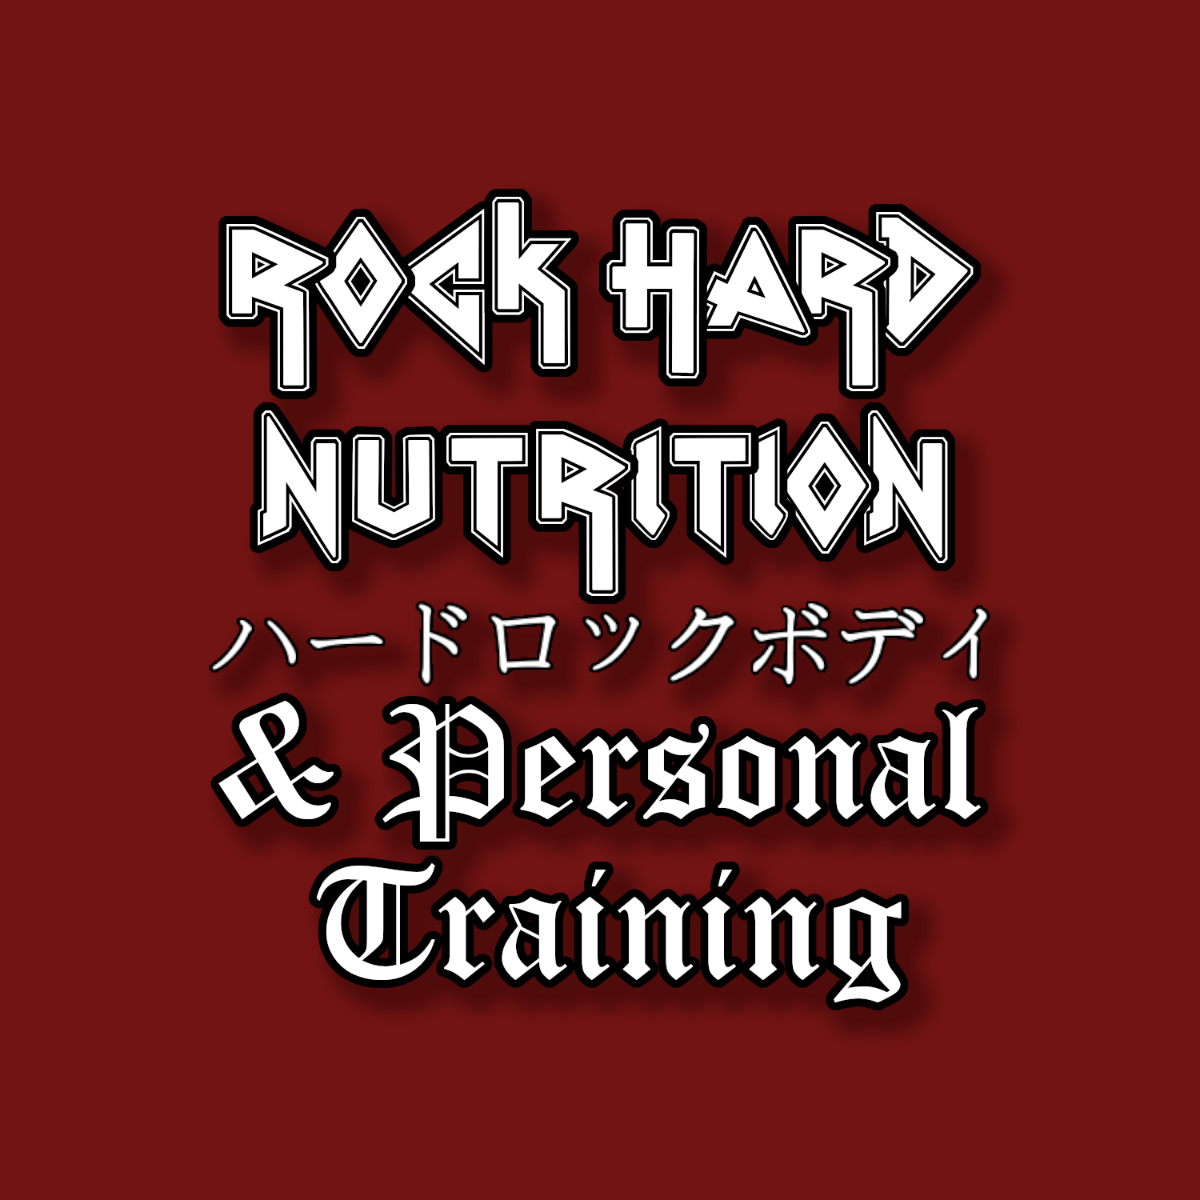 Rock Hard Nutrition & Personal Training-Image-2